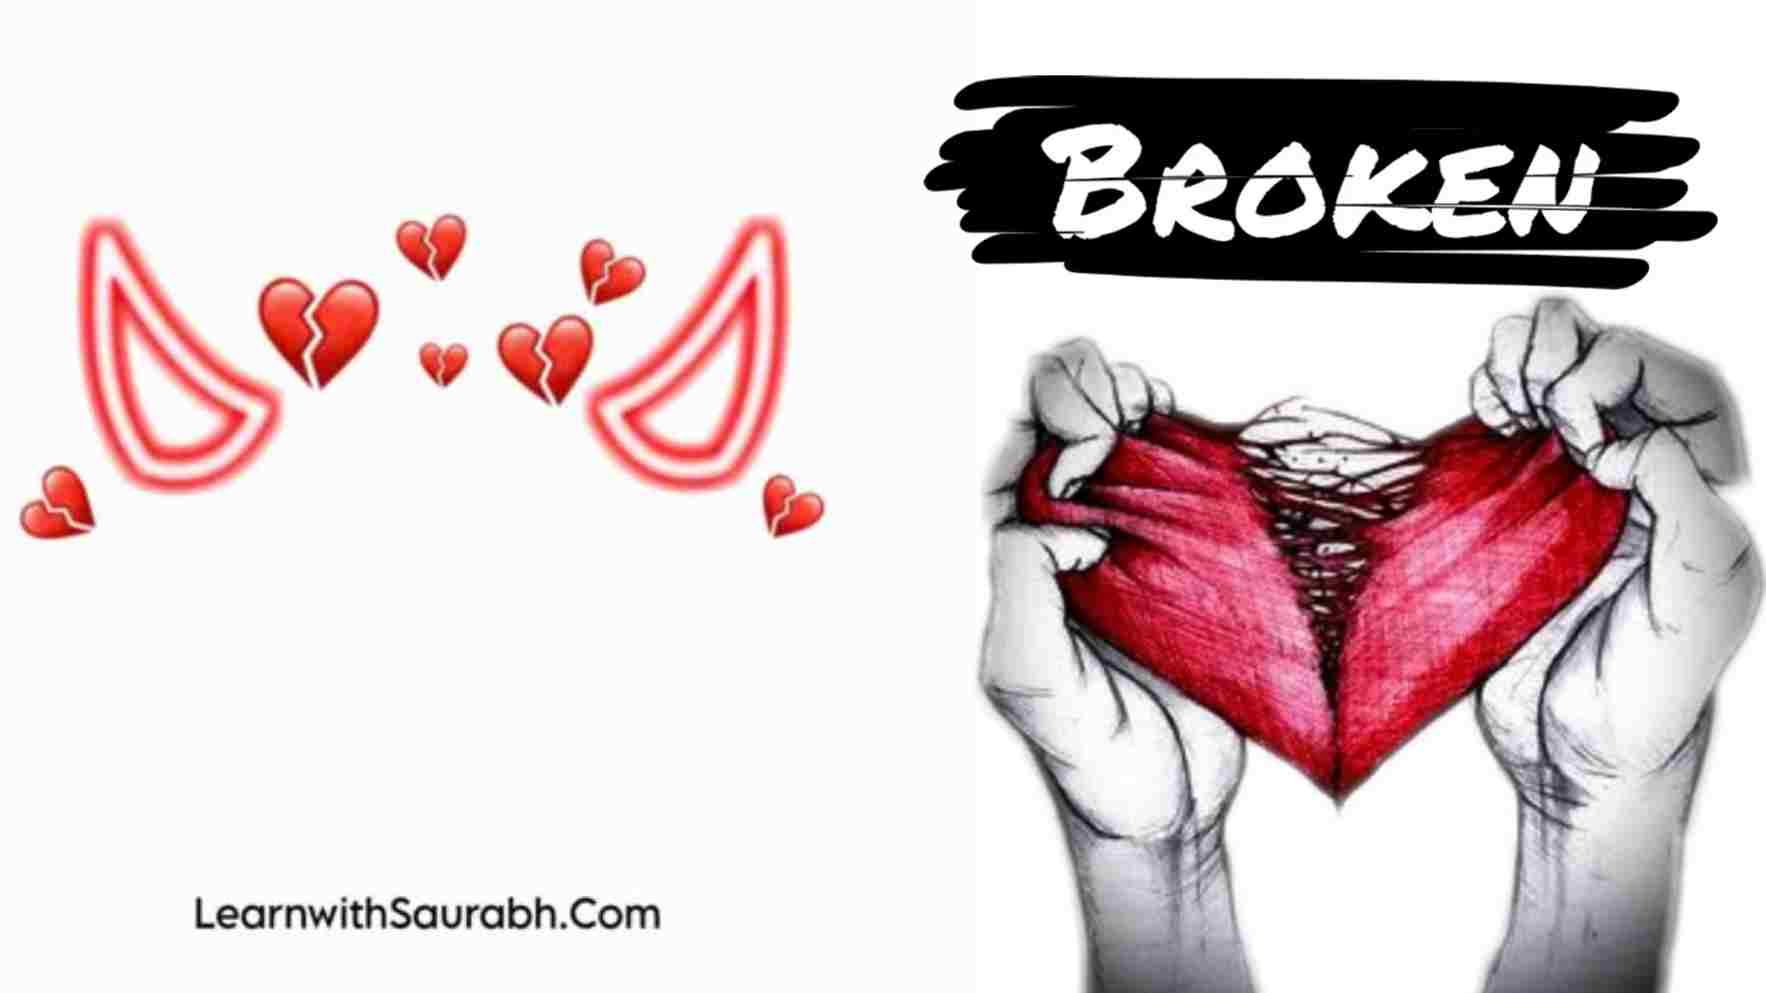 fb vip cover photo for broken heart